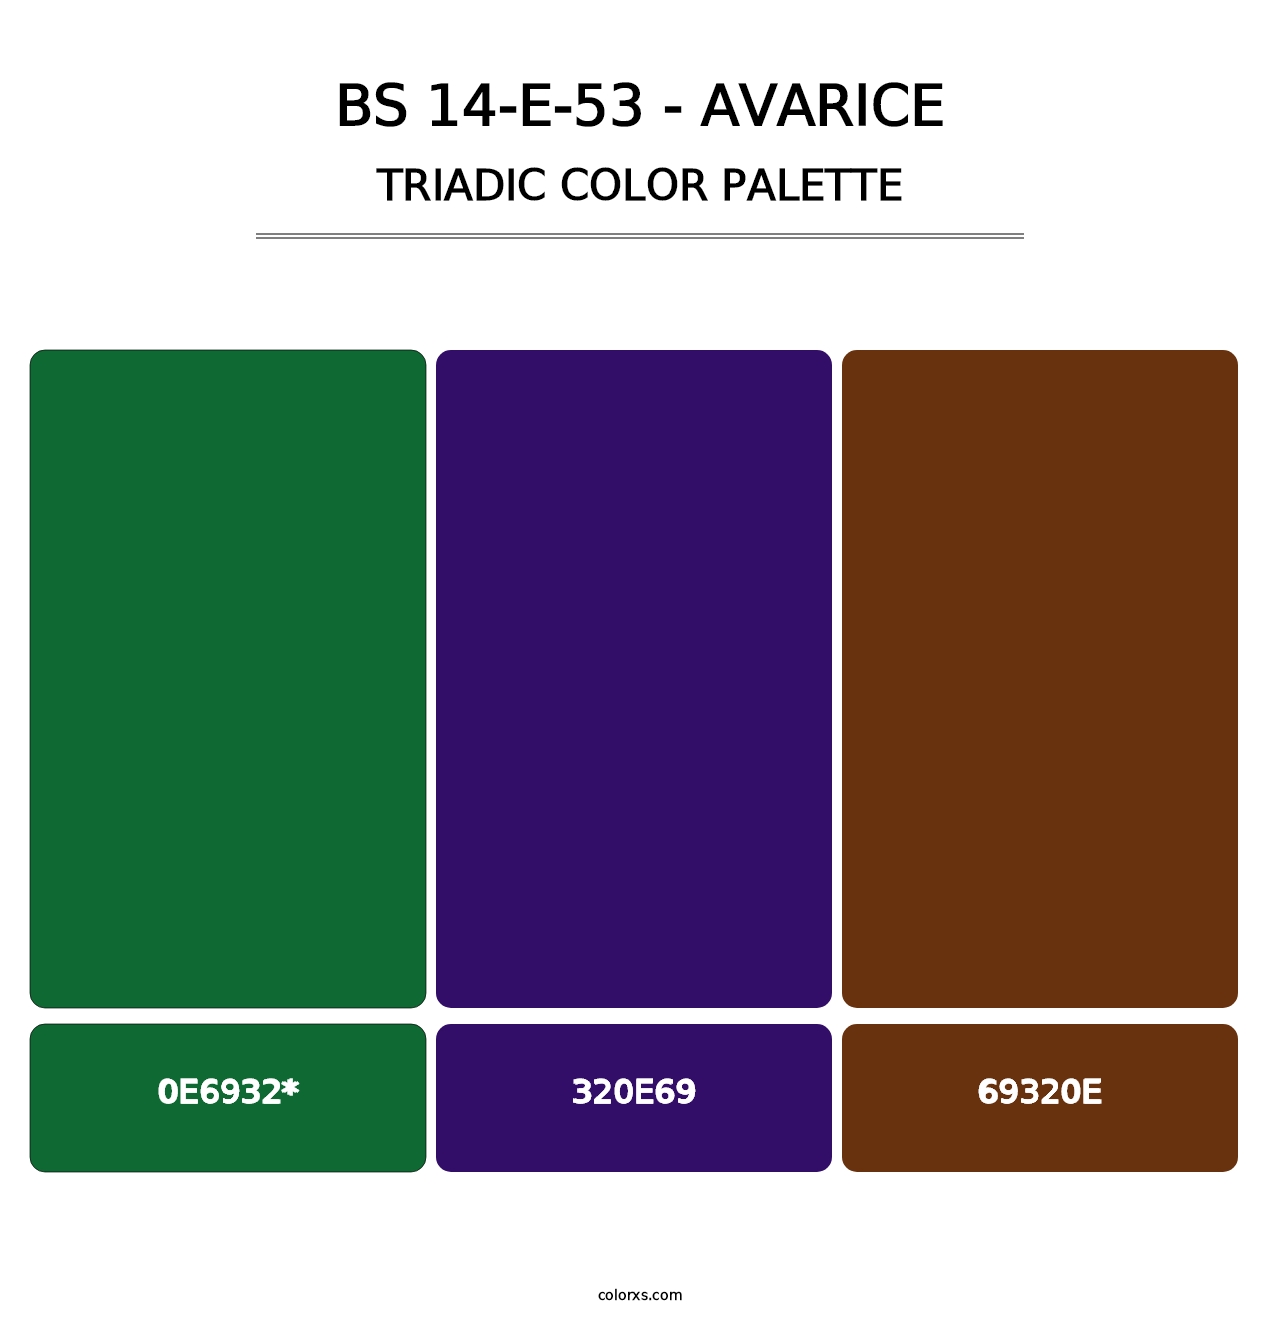 BS 14-E-53 - Avarice - Triadic Color Palette